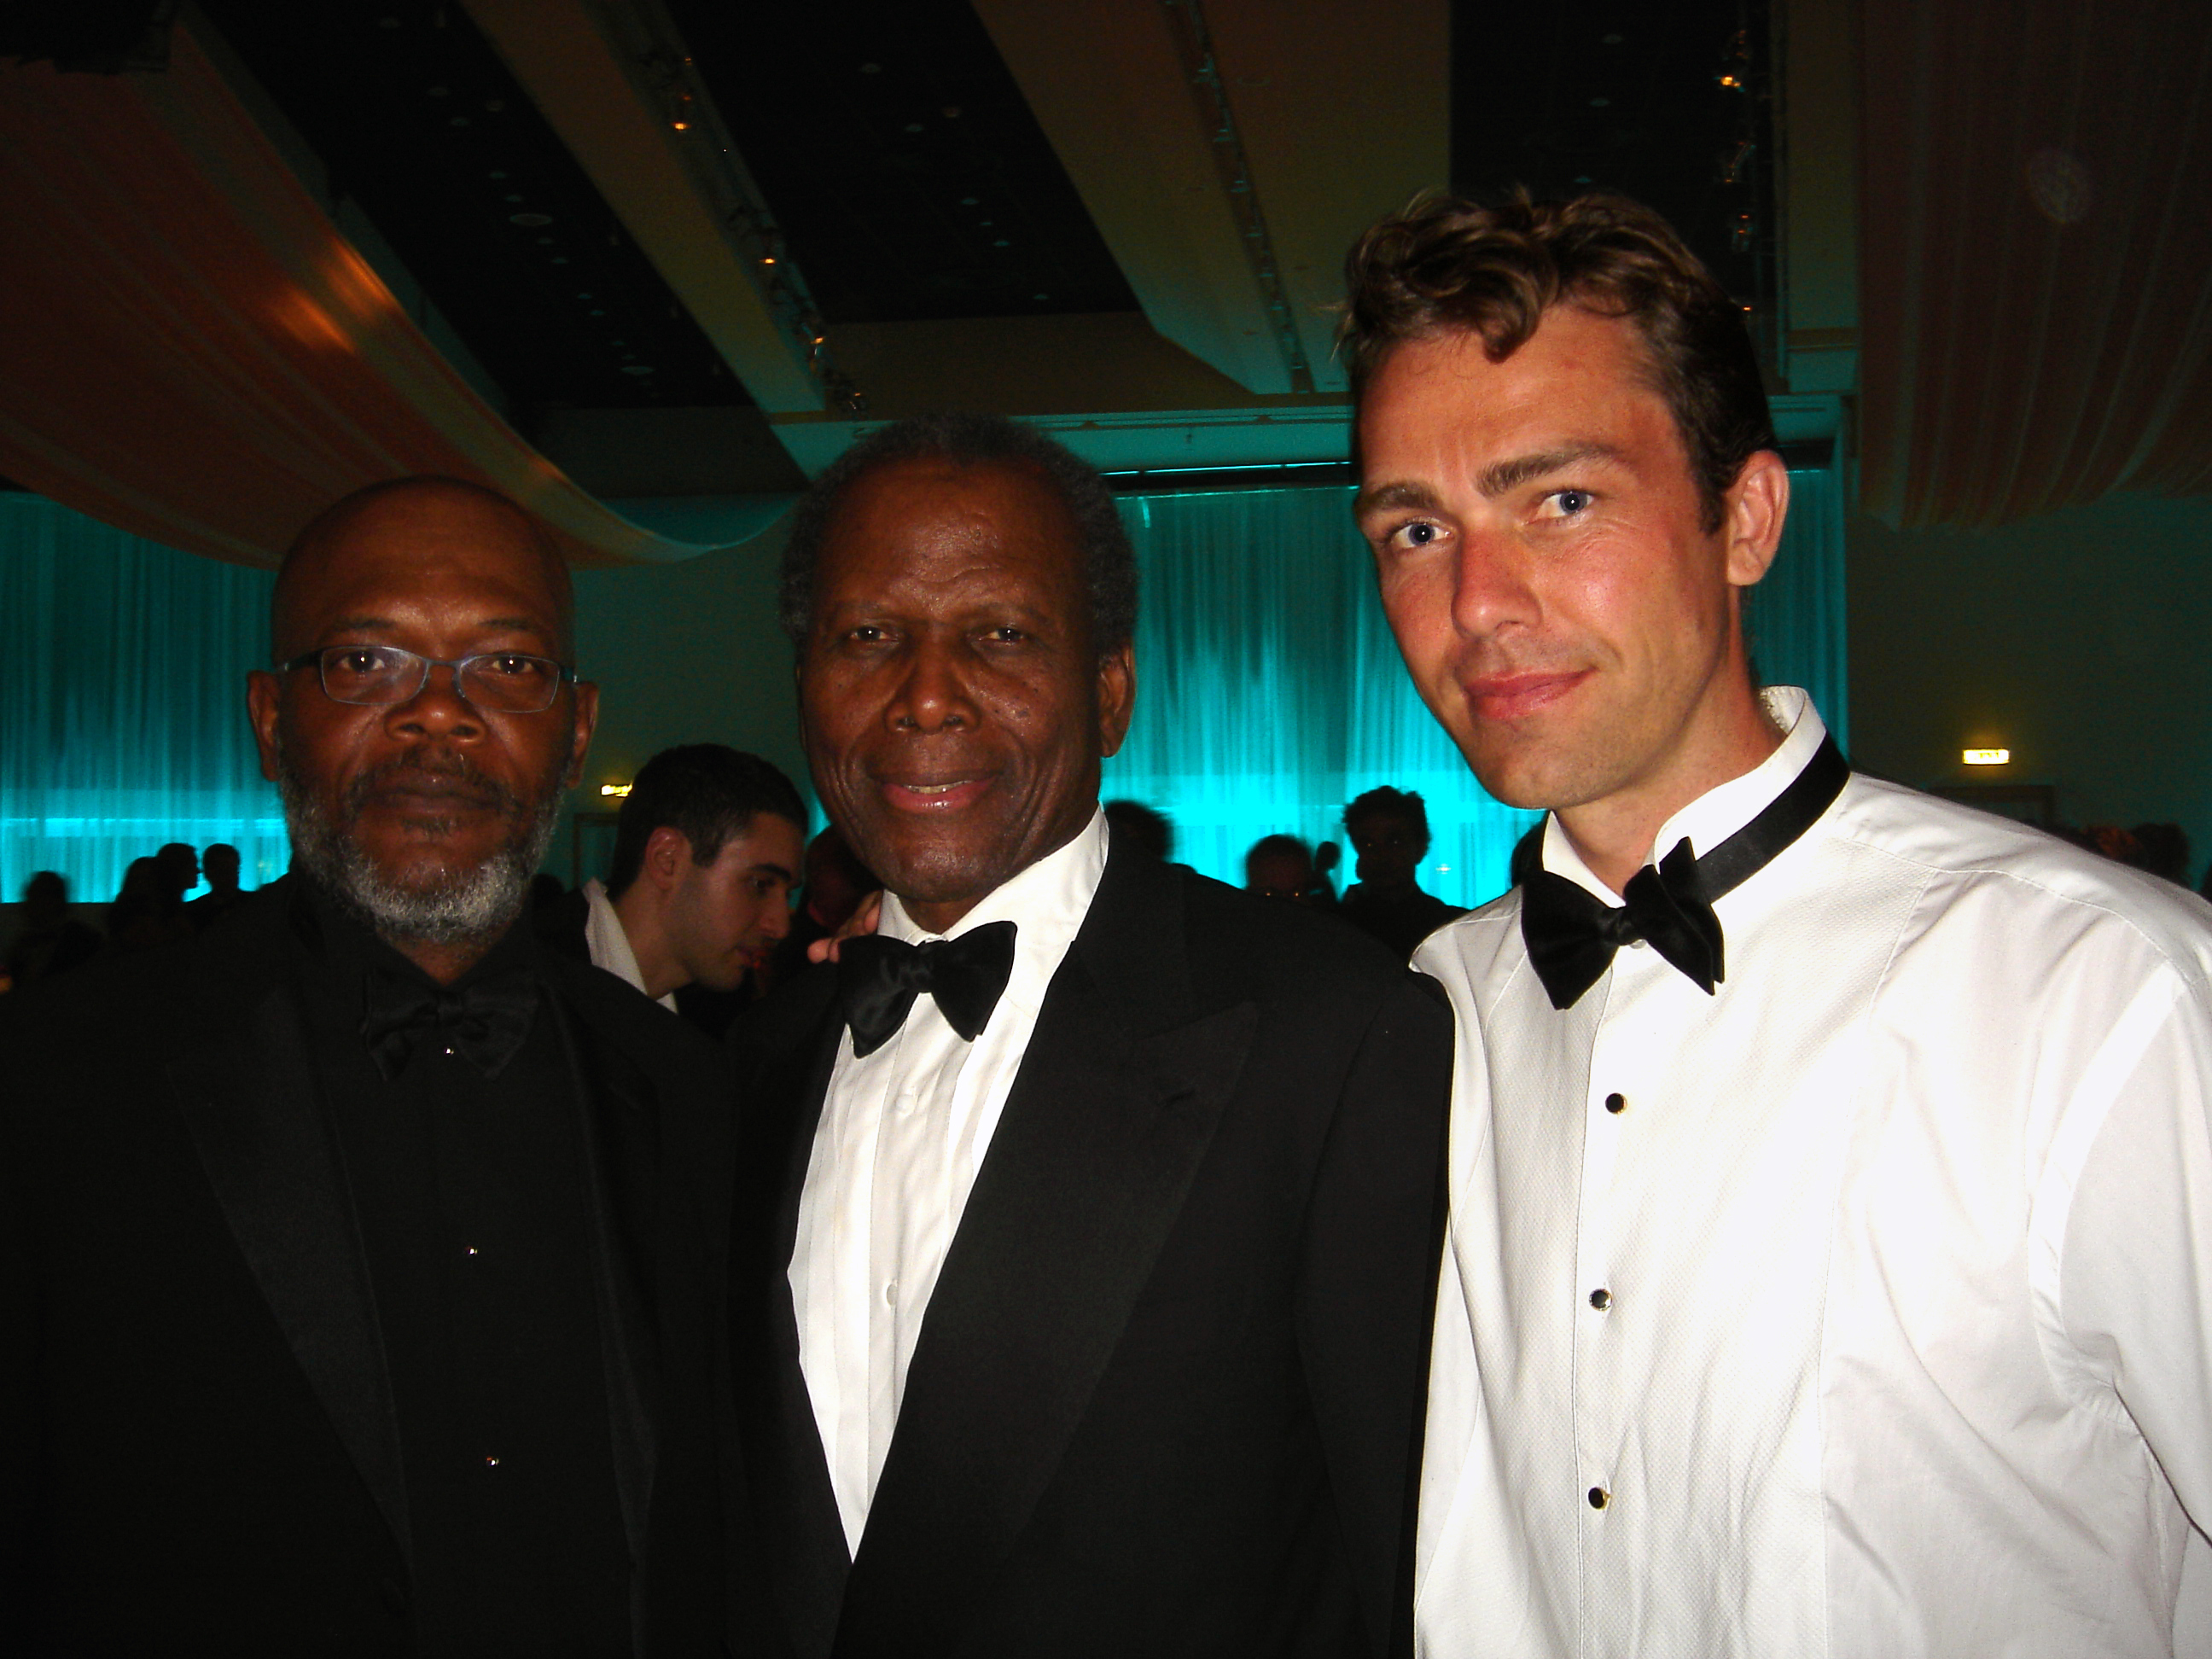 Samuel L. Jackson, Sidney Poitier and Garnet Mae. Cannes Film Festival 2006.